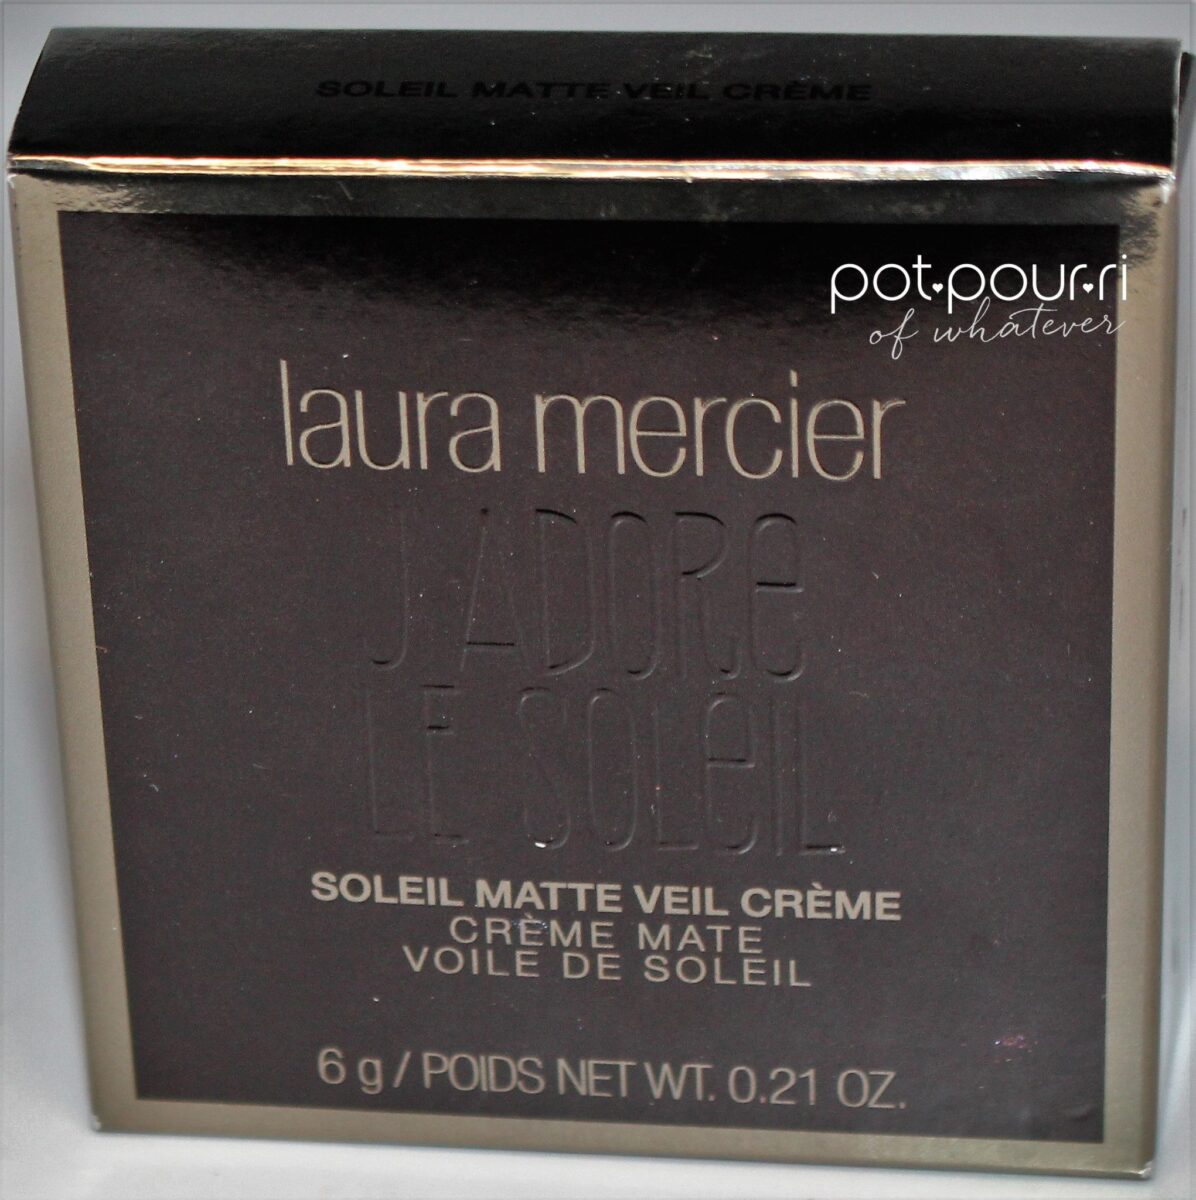 Laura-Mercier-J'adore-le-soleil-bronzer-packaging